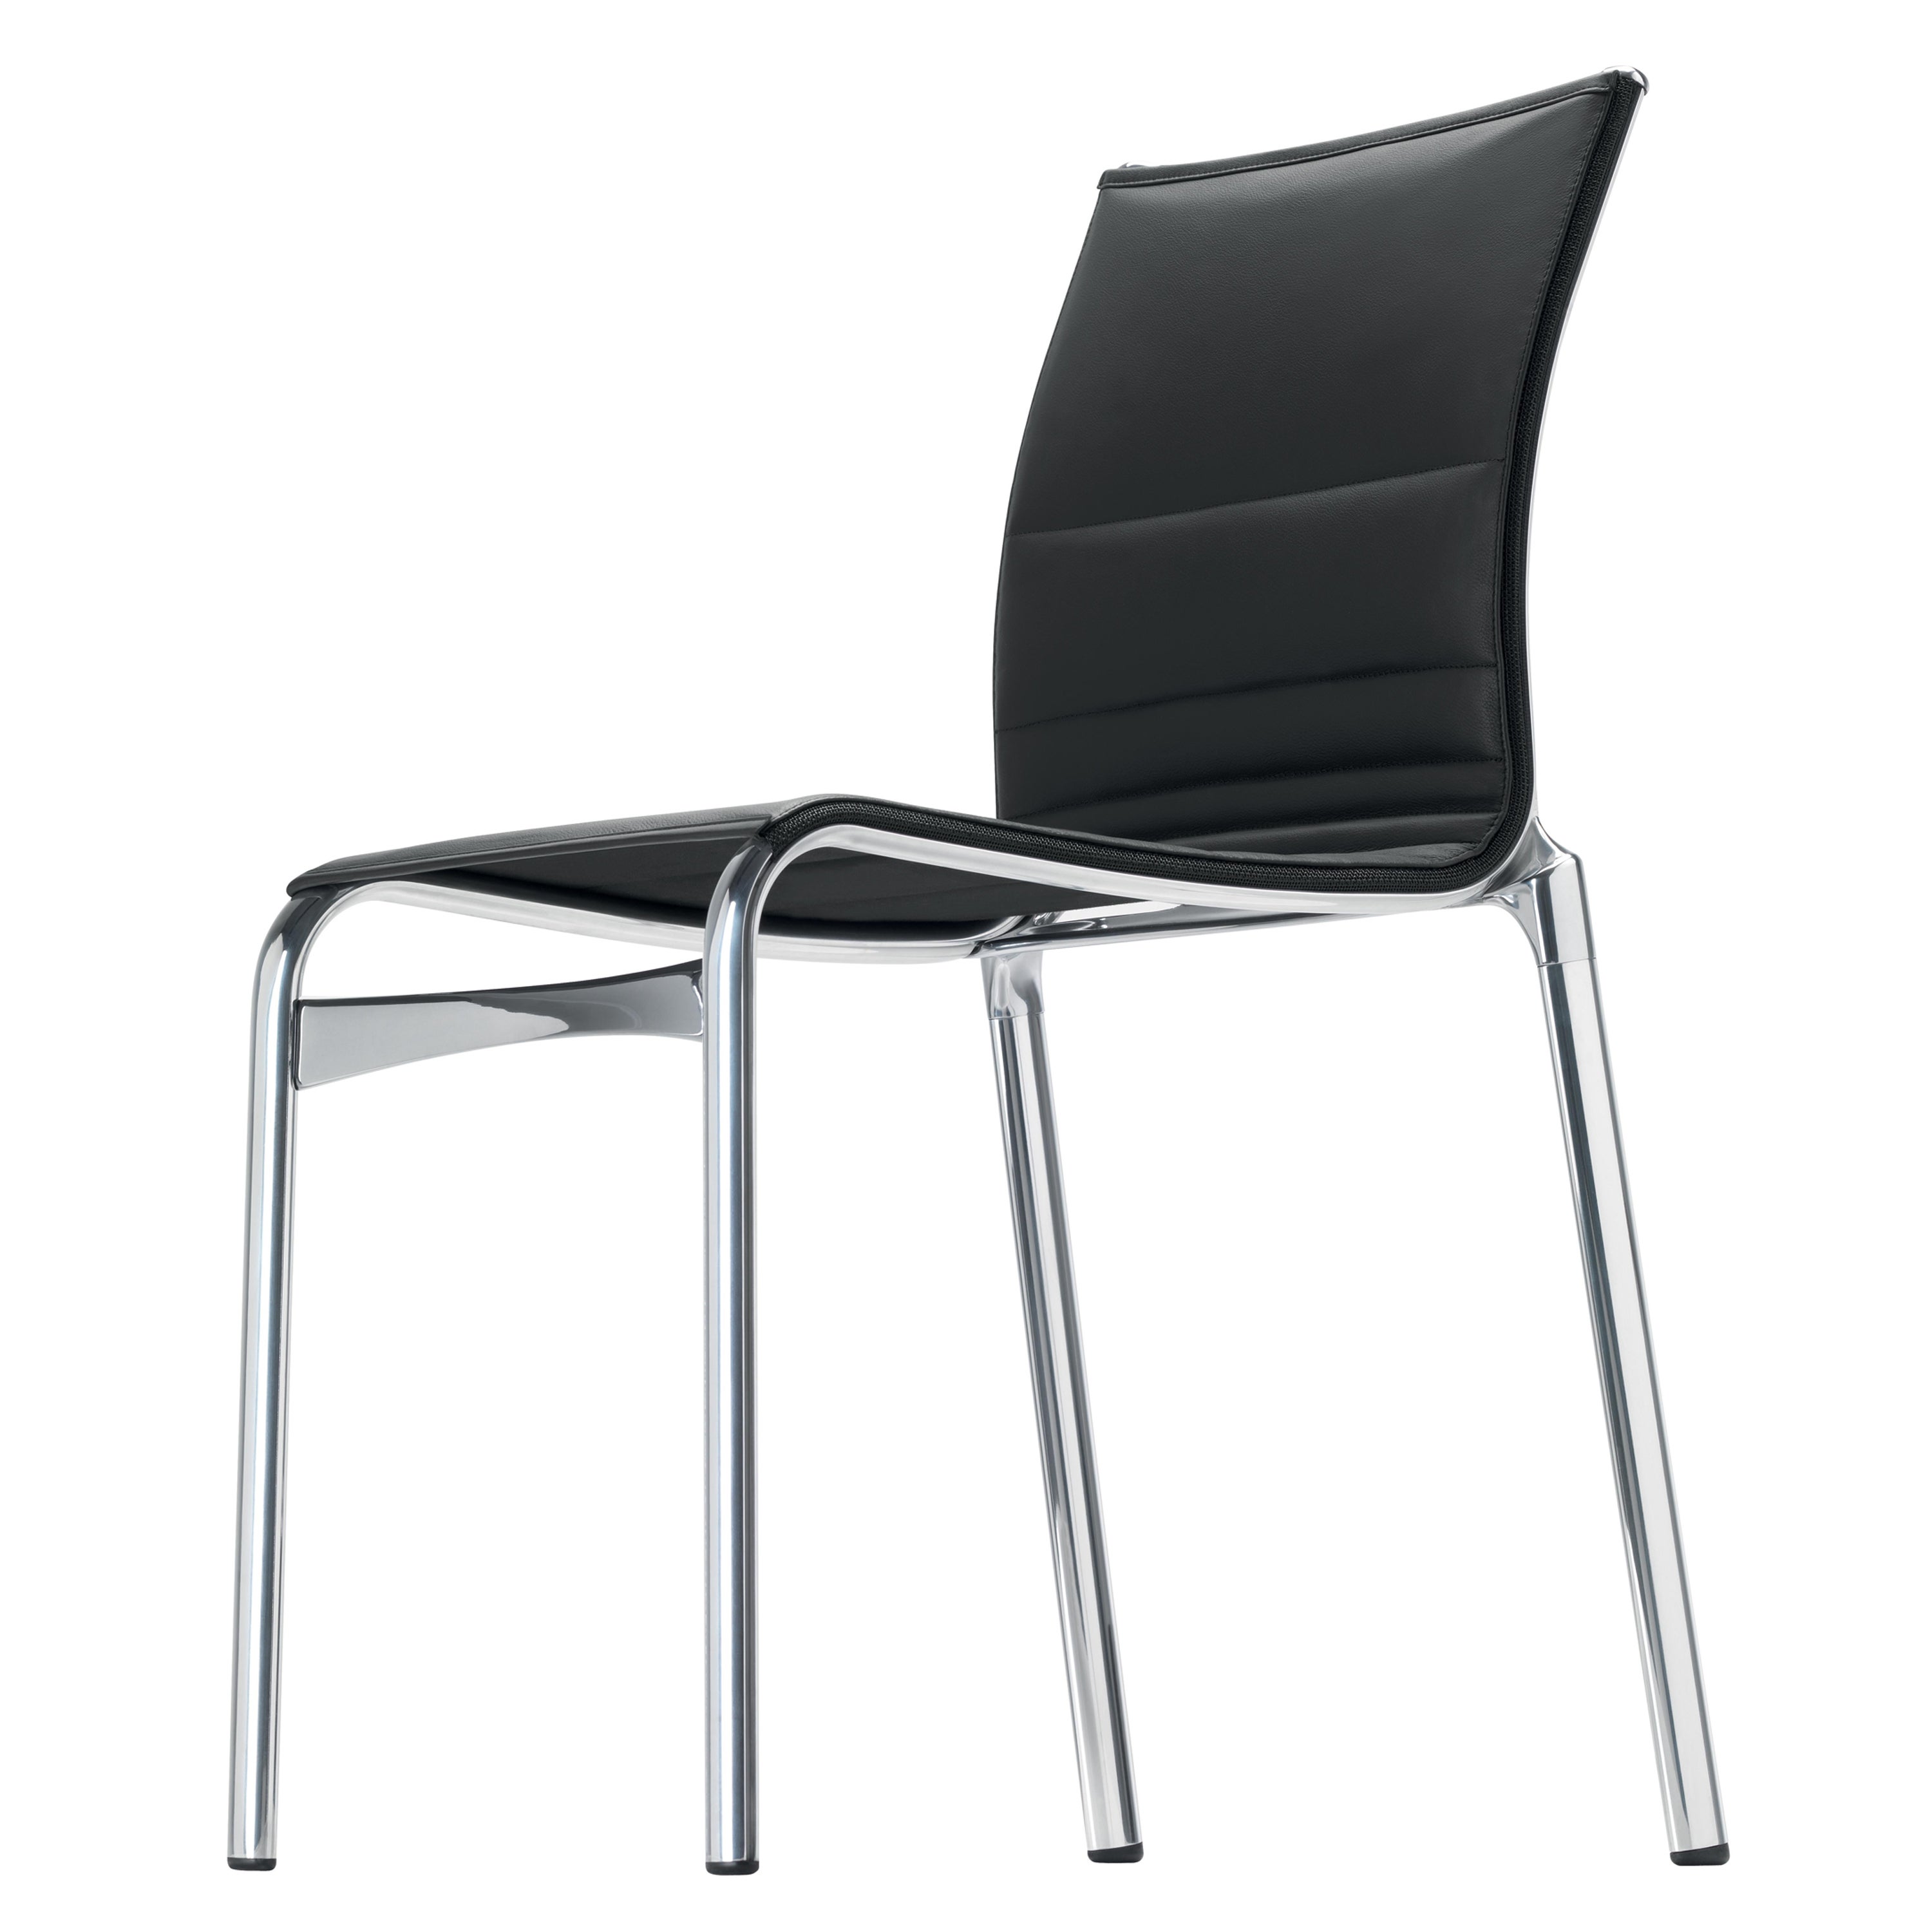 Alias Bigframe 44 Chair in Black Leather Upholstery with Chromed Aluminium Frame